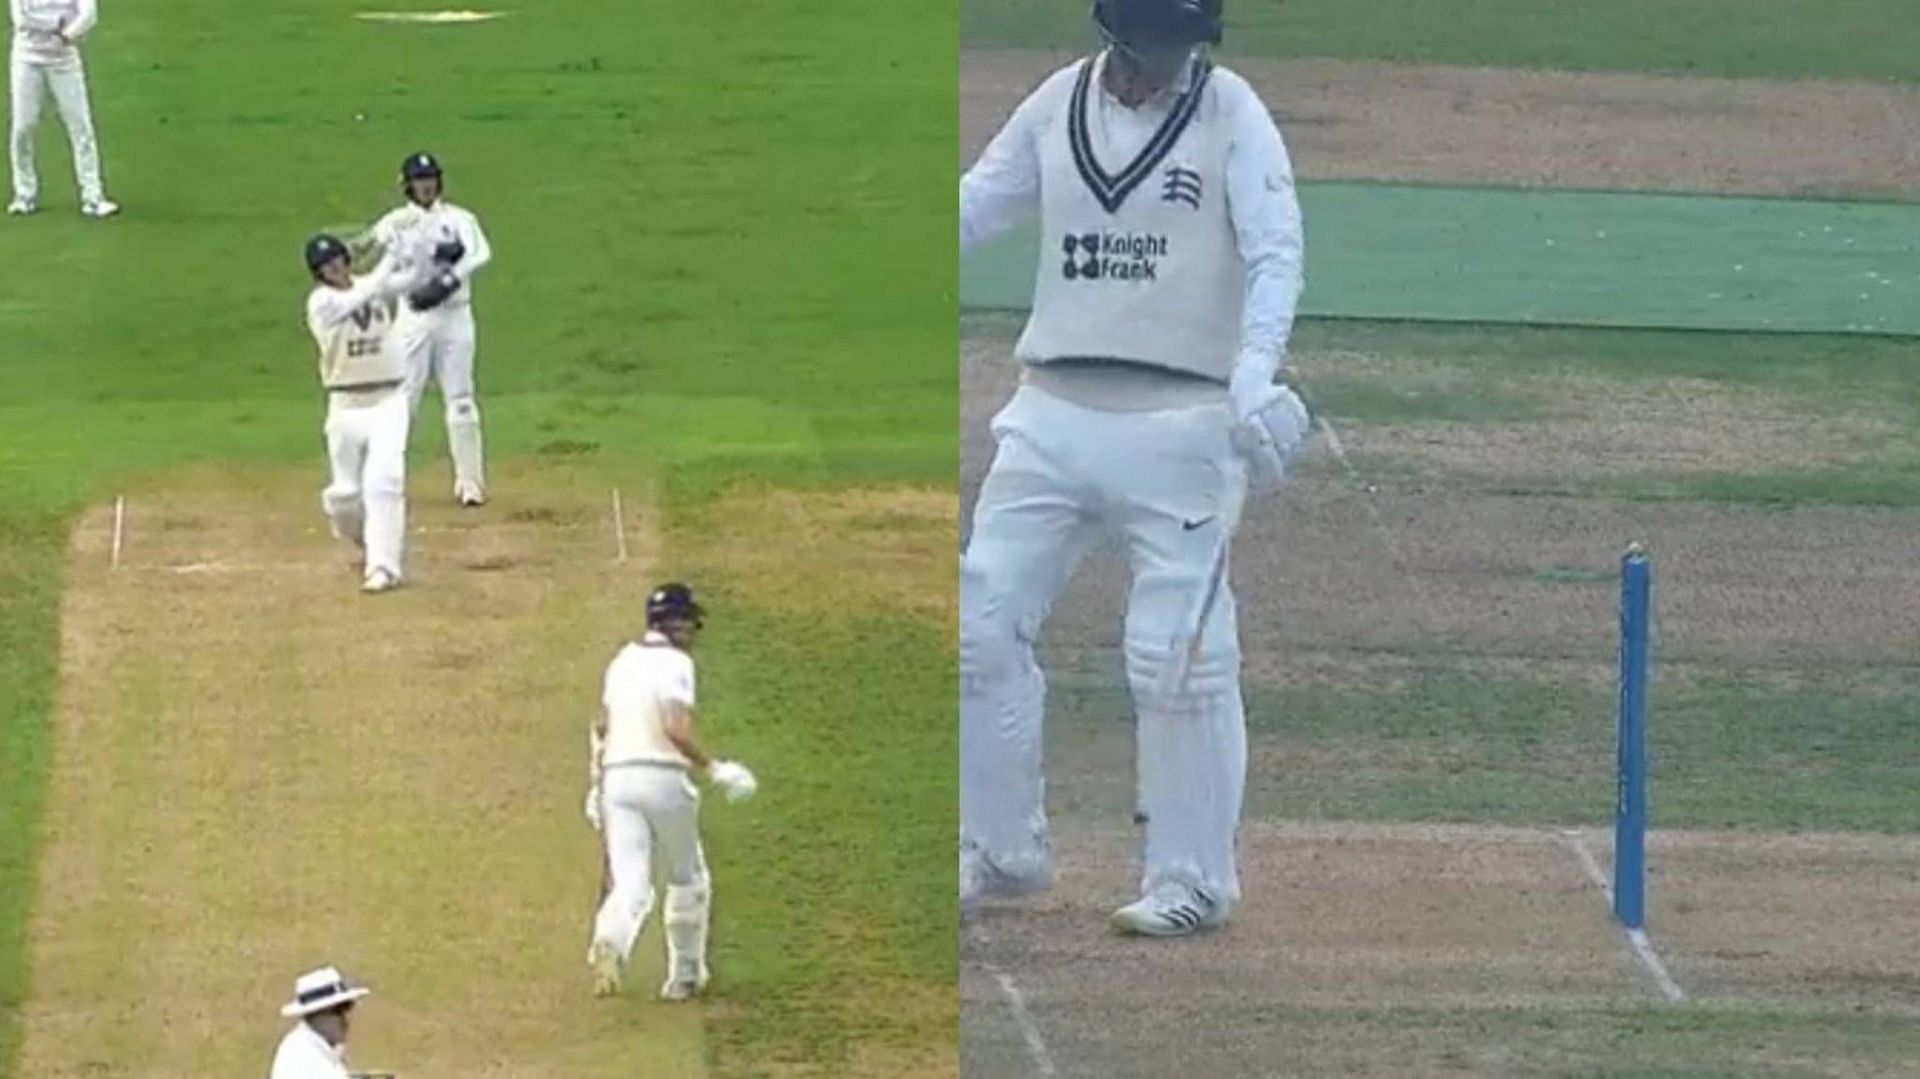 Toby Roland-Jones lost his wicket in a bizarre manner (Image: Twitter)